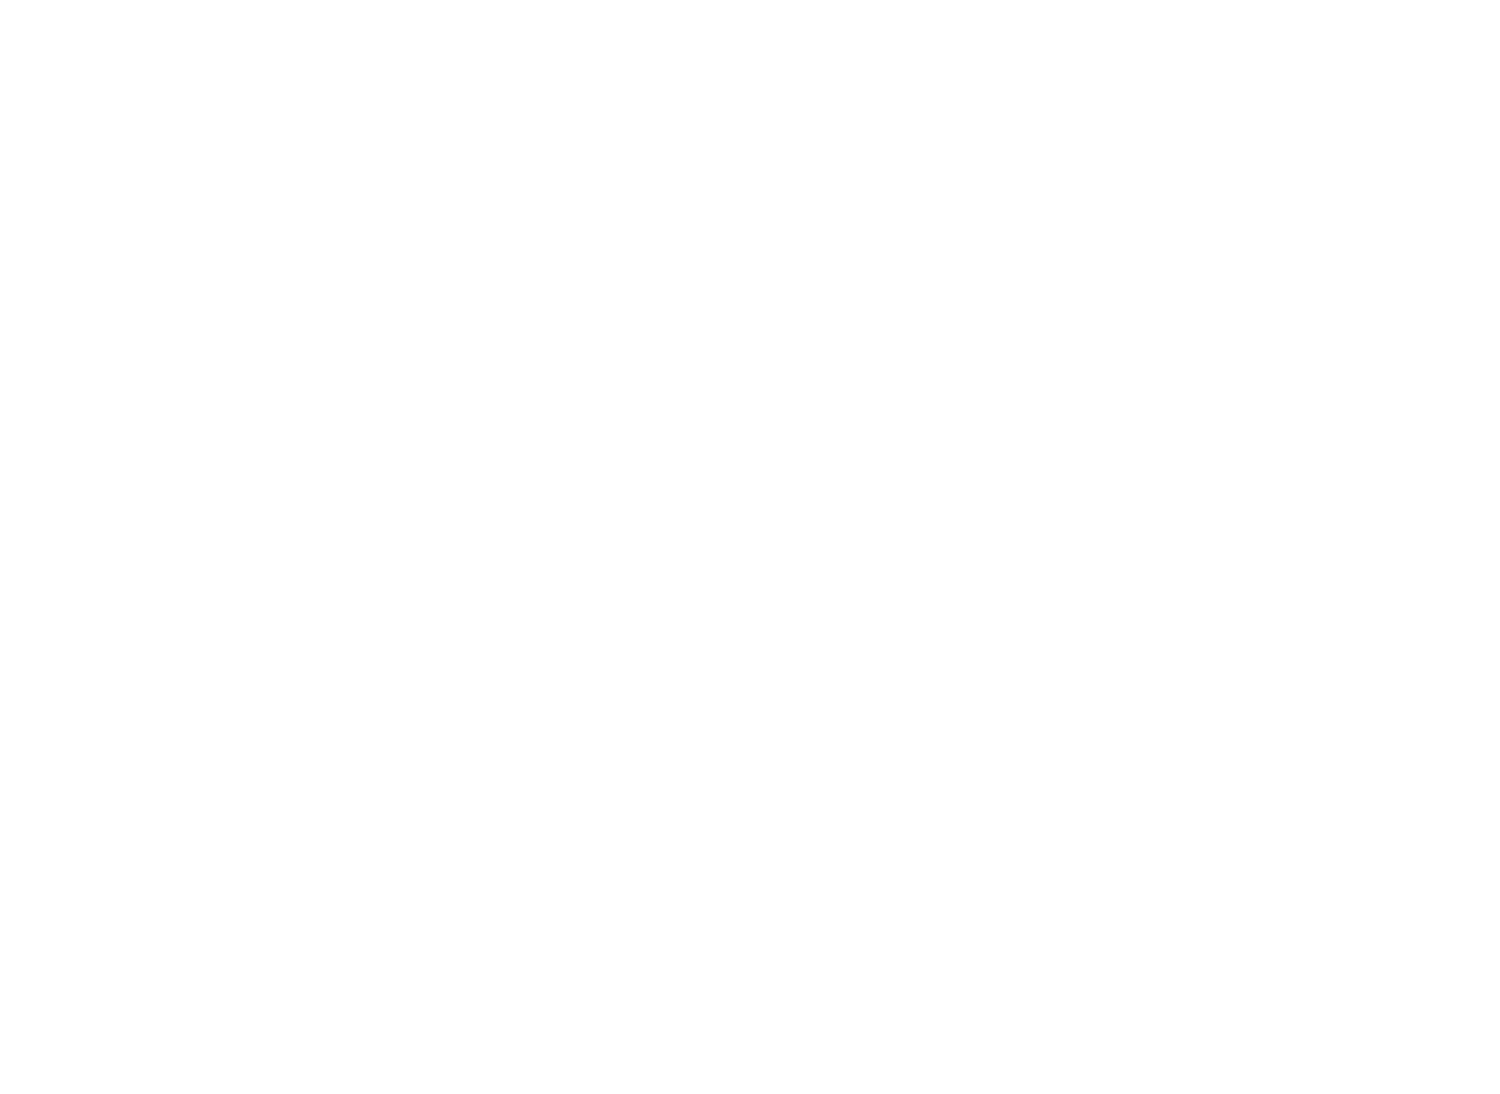 Bradley James Entertainment